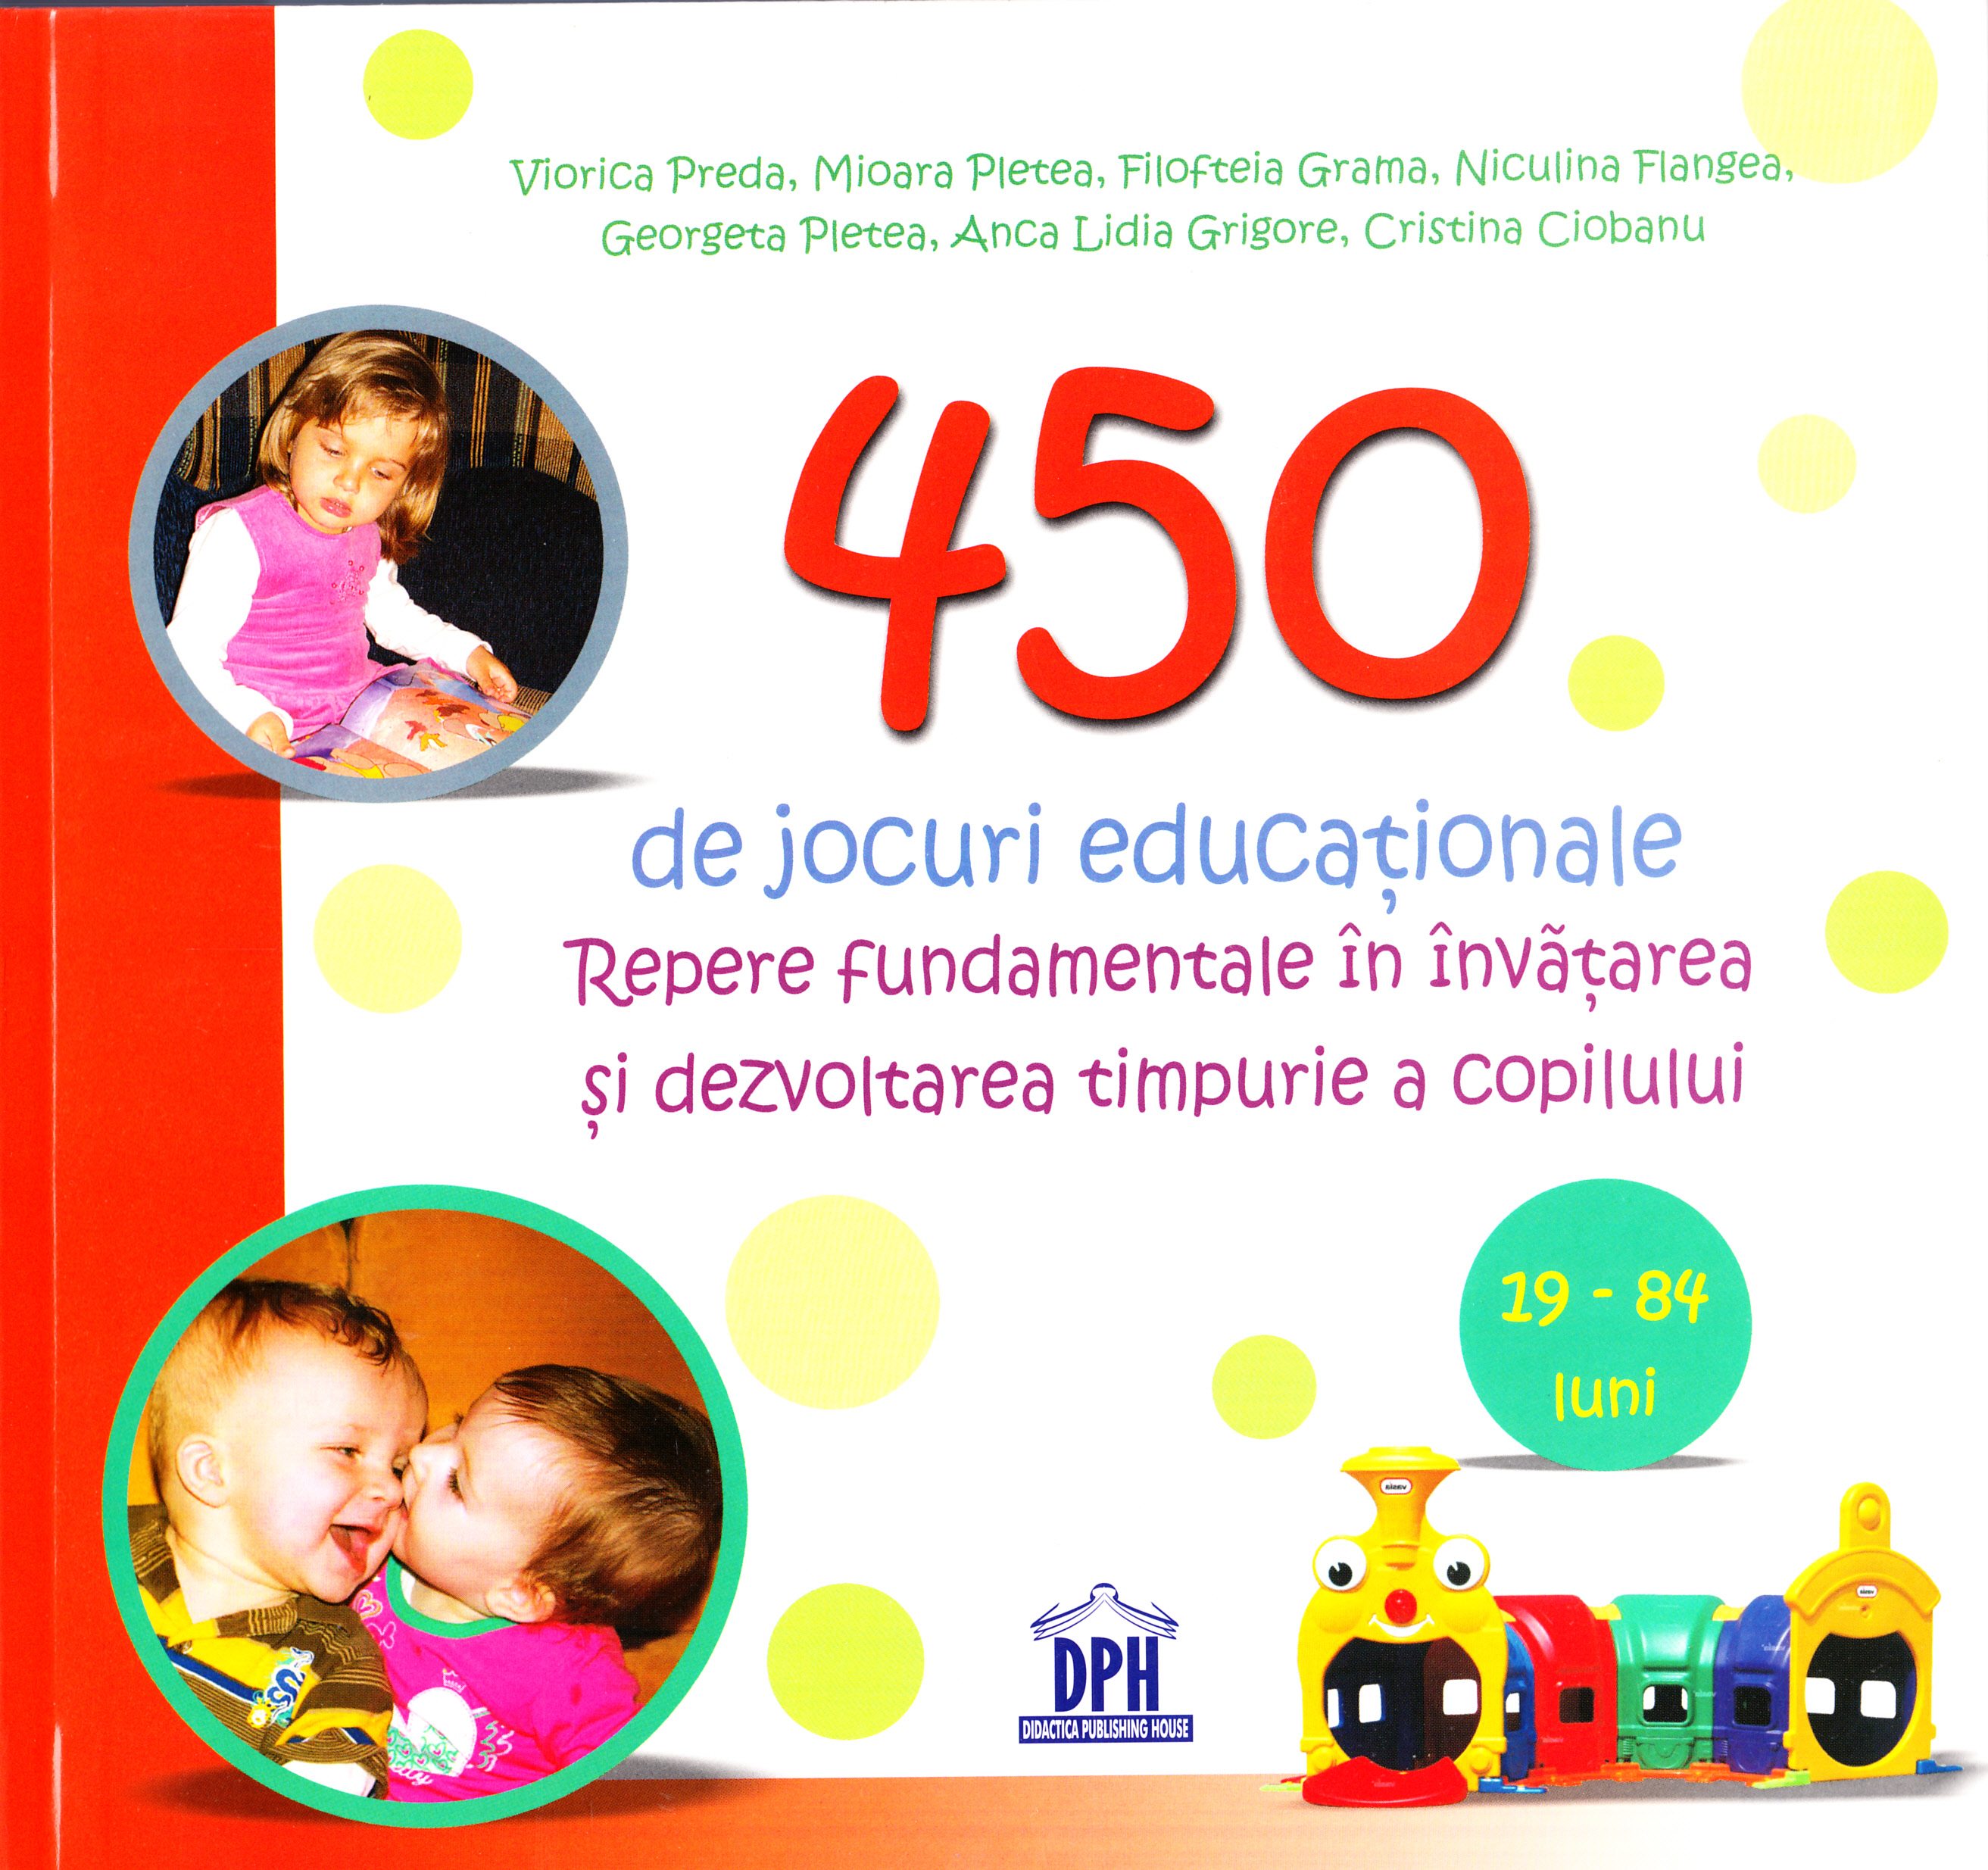 450 de jocuri educationale (19-84 luni) - Viorica Preda, Mioara Pletea, Filofteia Grama